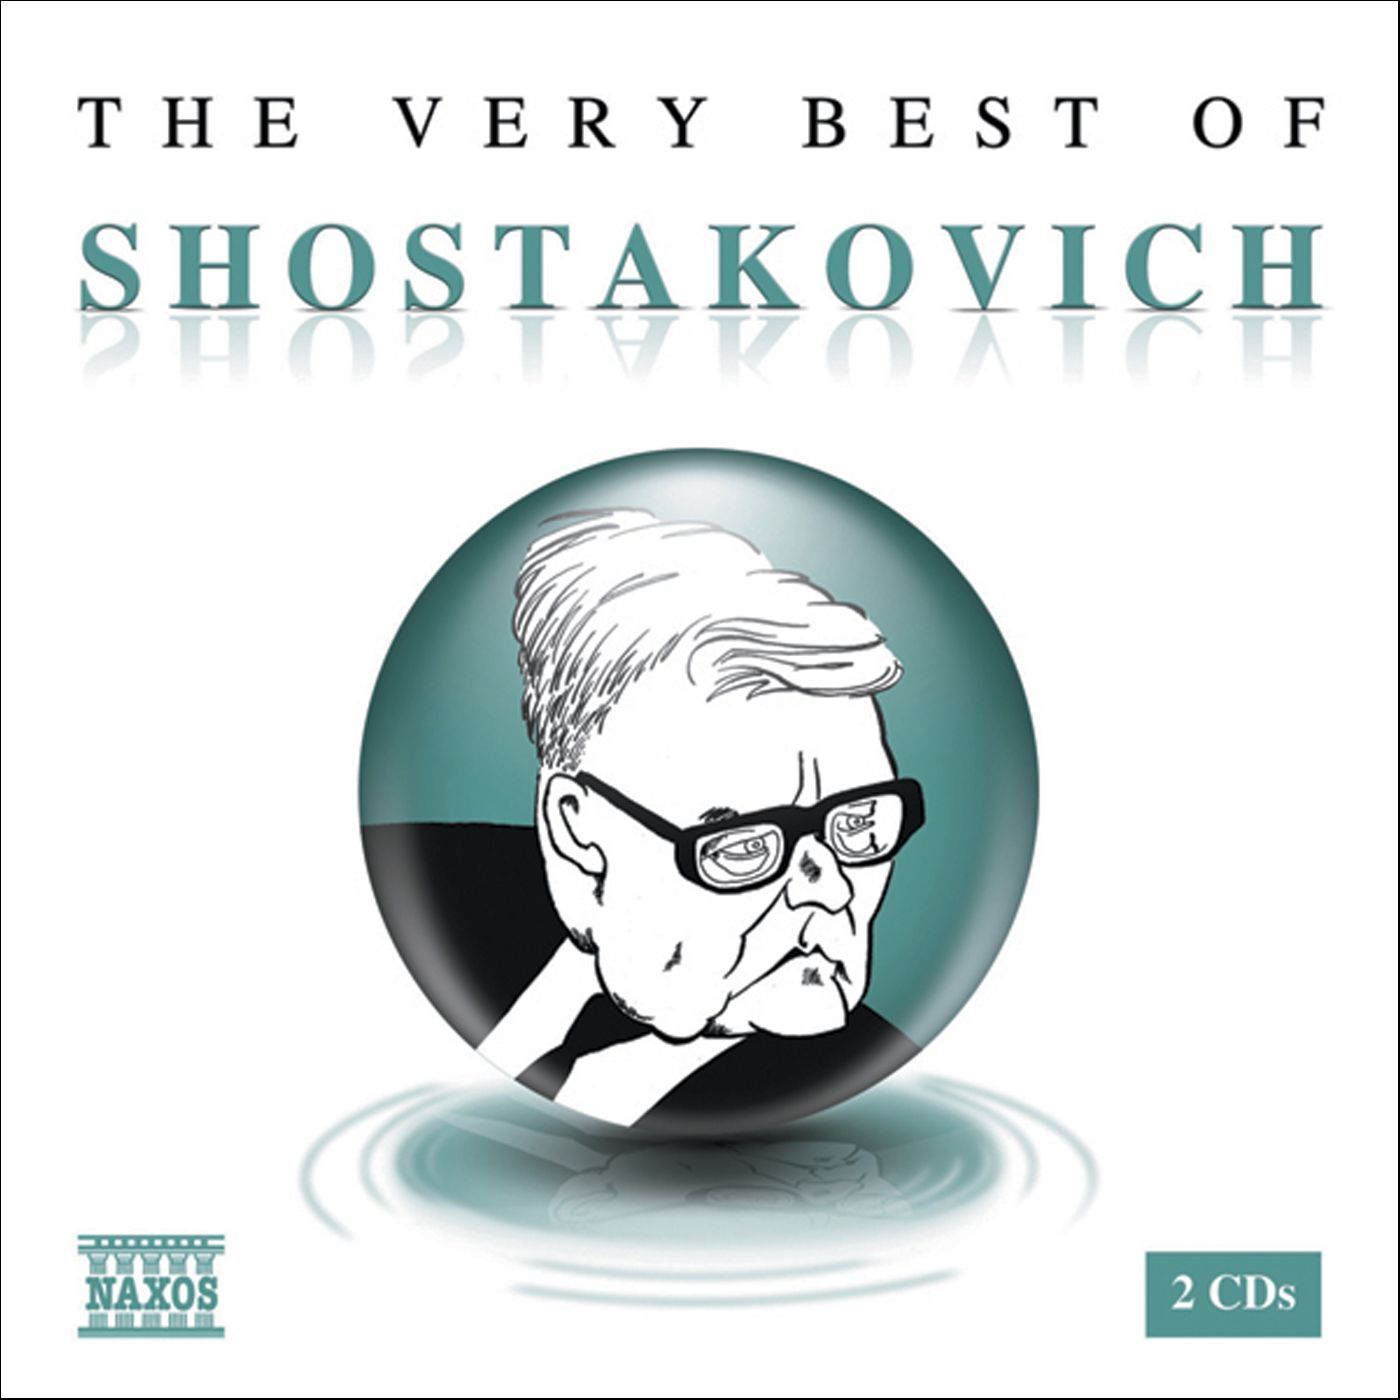 Шостакович душа. Шостакович портрет композитора. Dmitri Shostakovich Symphony no 1. Dmitri Shostakovich the very best of Naxos обложки.